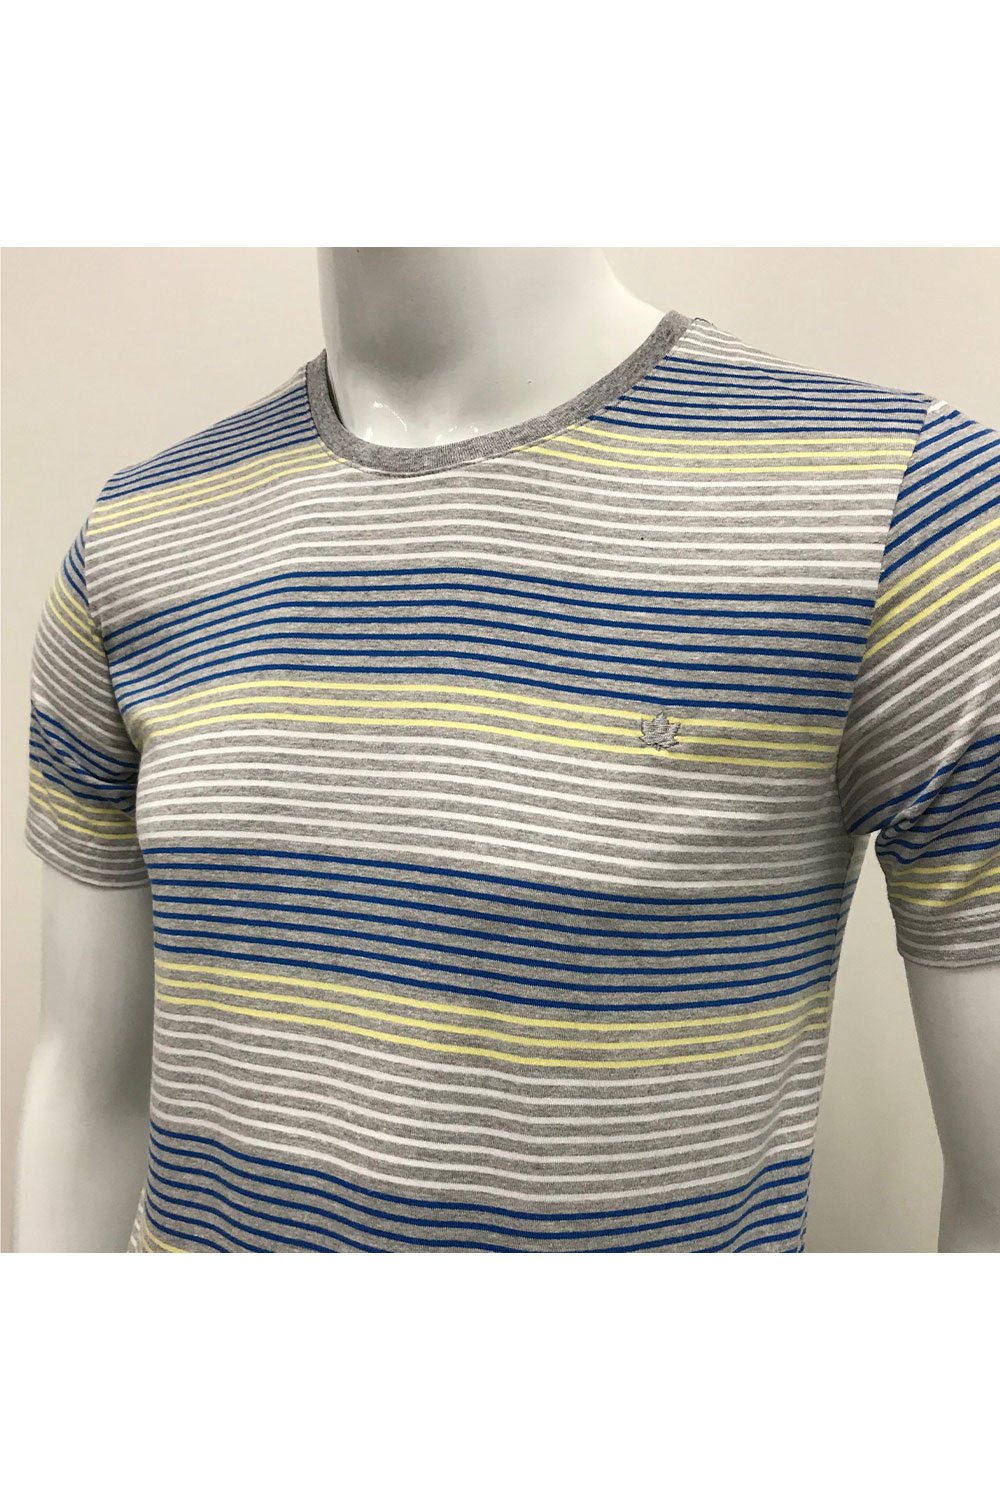 camiseta masculina mescla claro listrado colorido meia malha seeder se0301115 di0243